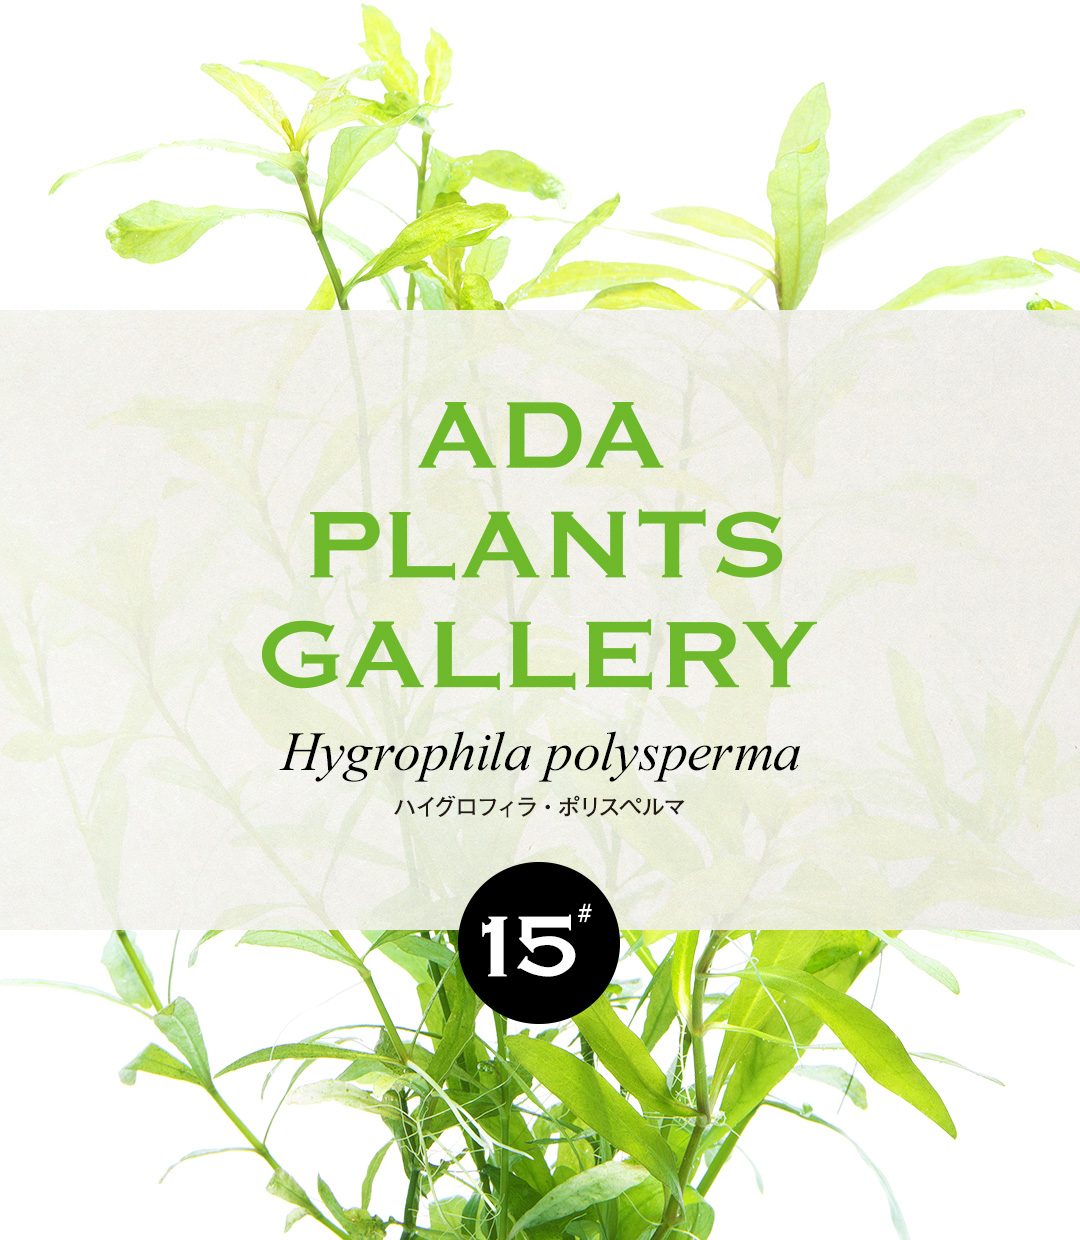 ADA PLANTS GALLERY #15 Hygrophila polysperma